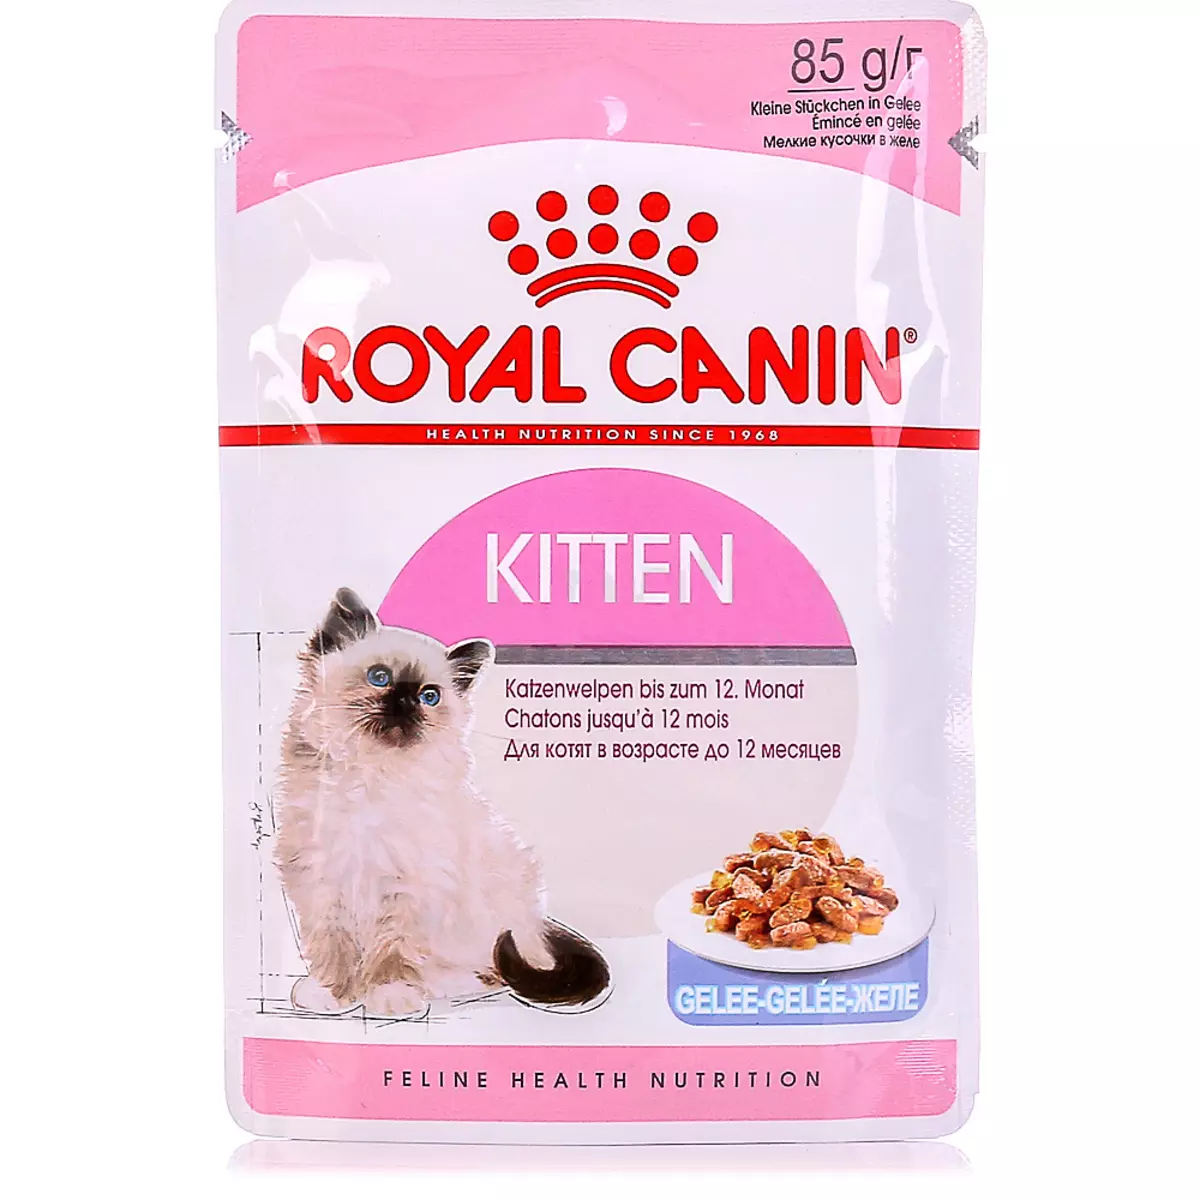 Kittens Royal Canin的干糧：小貓組合長達12個月，餵食滅菌小貓。它會聞到它們嗎？劑量 22012_7